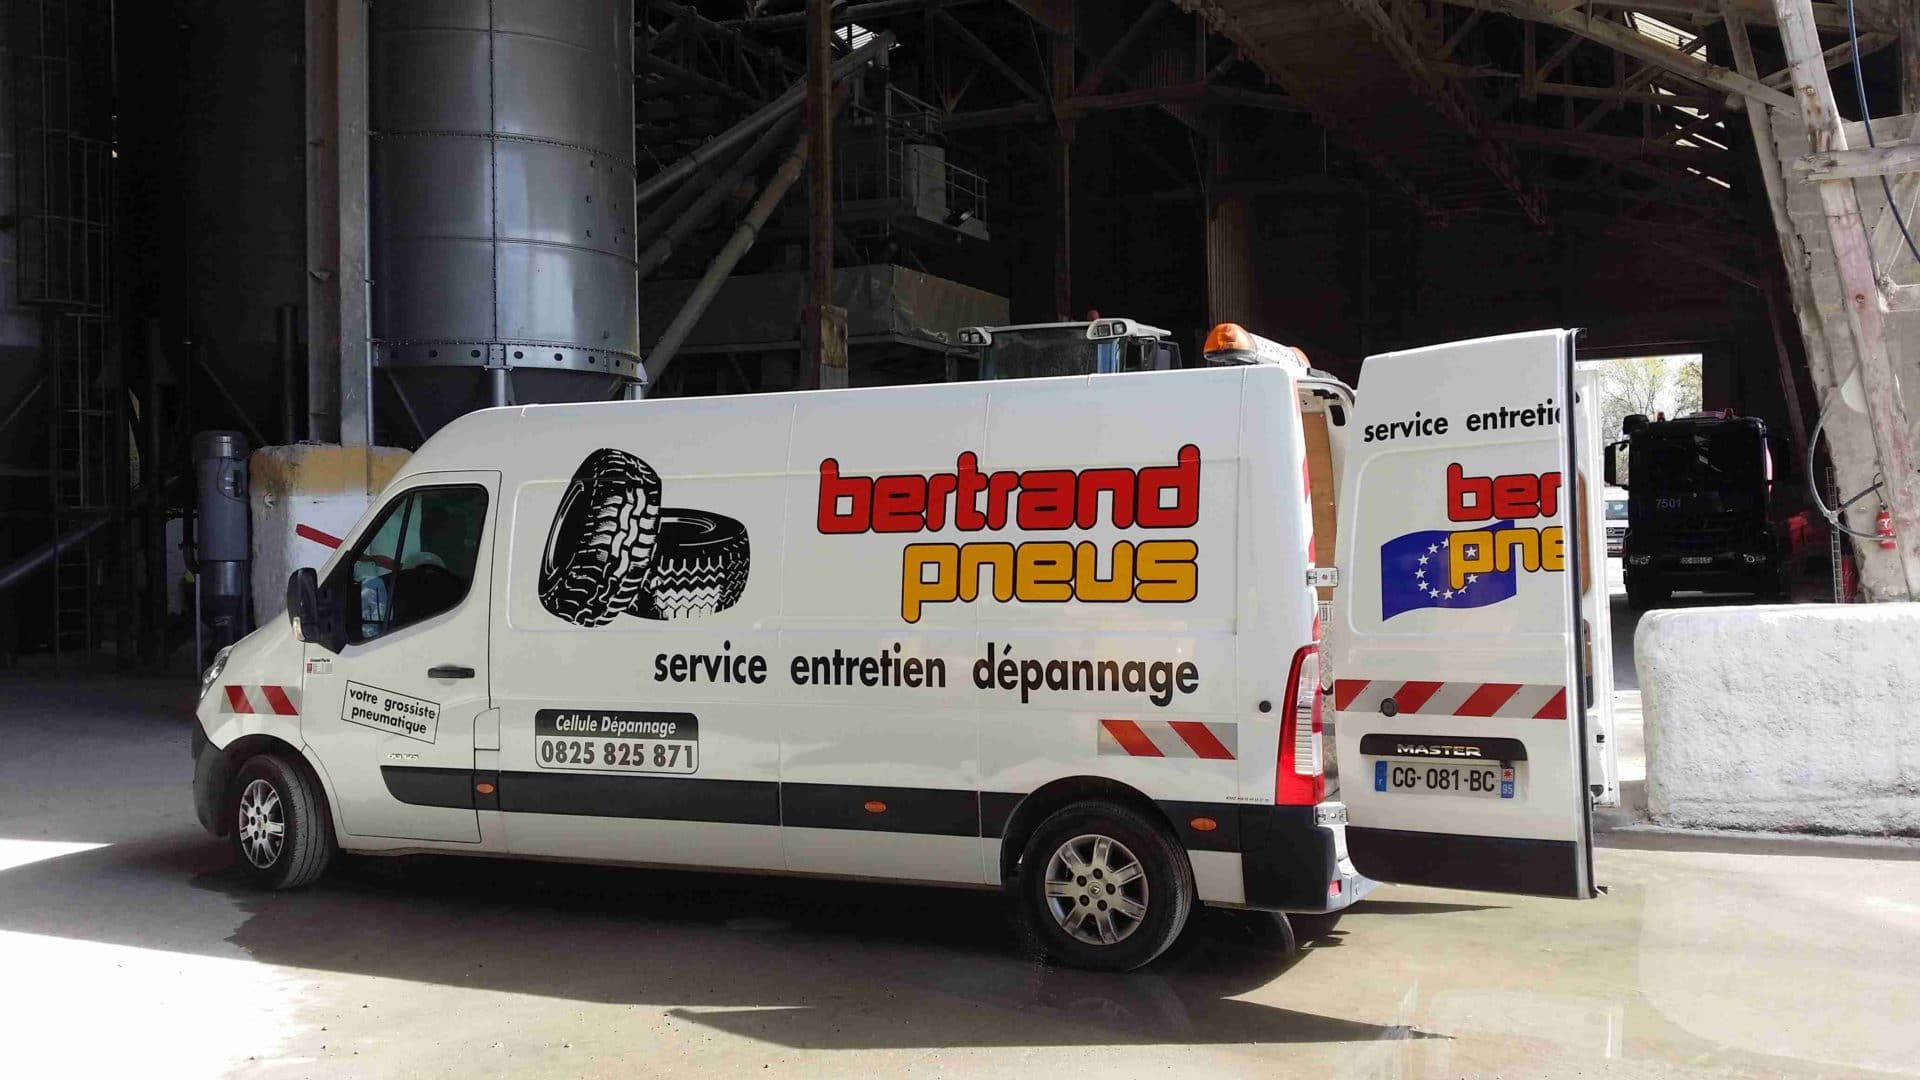 Bertrand pneus distribue Pneus industries